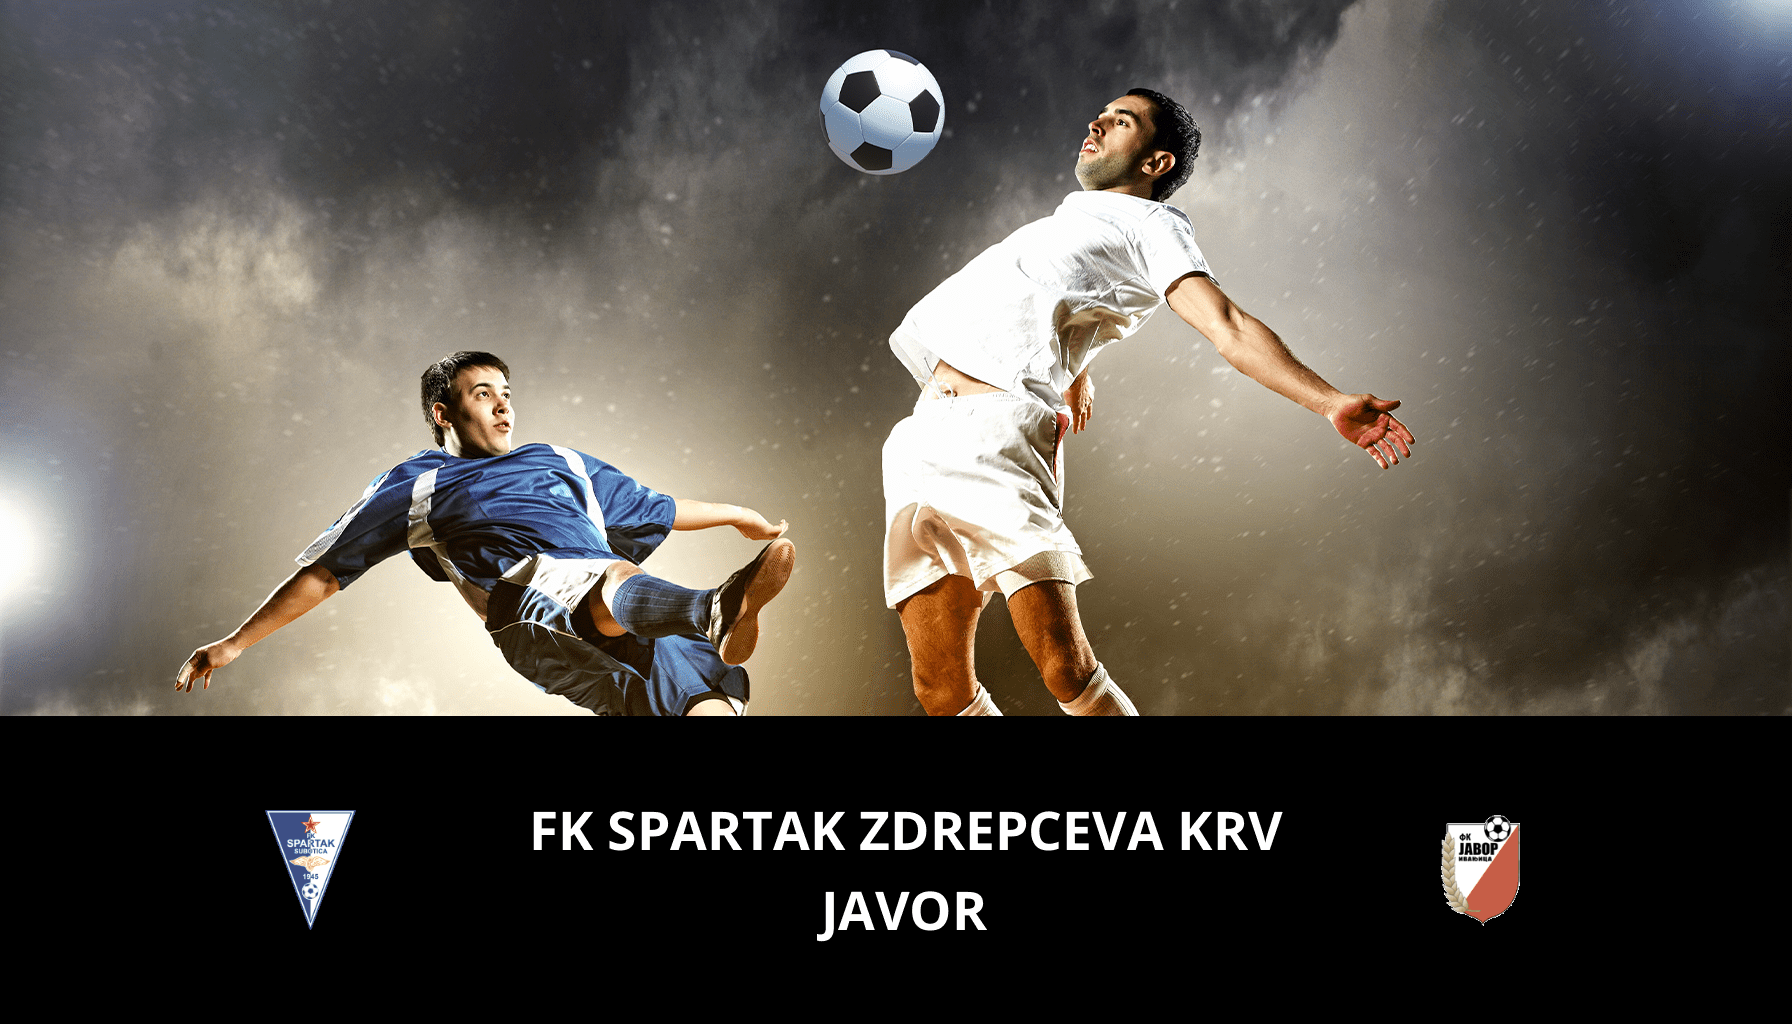 Previsione per FK Spartak Zdrepceva KRV VS Javor il 15/04/2024 Analysis of the match